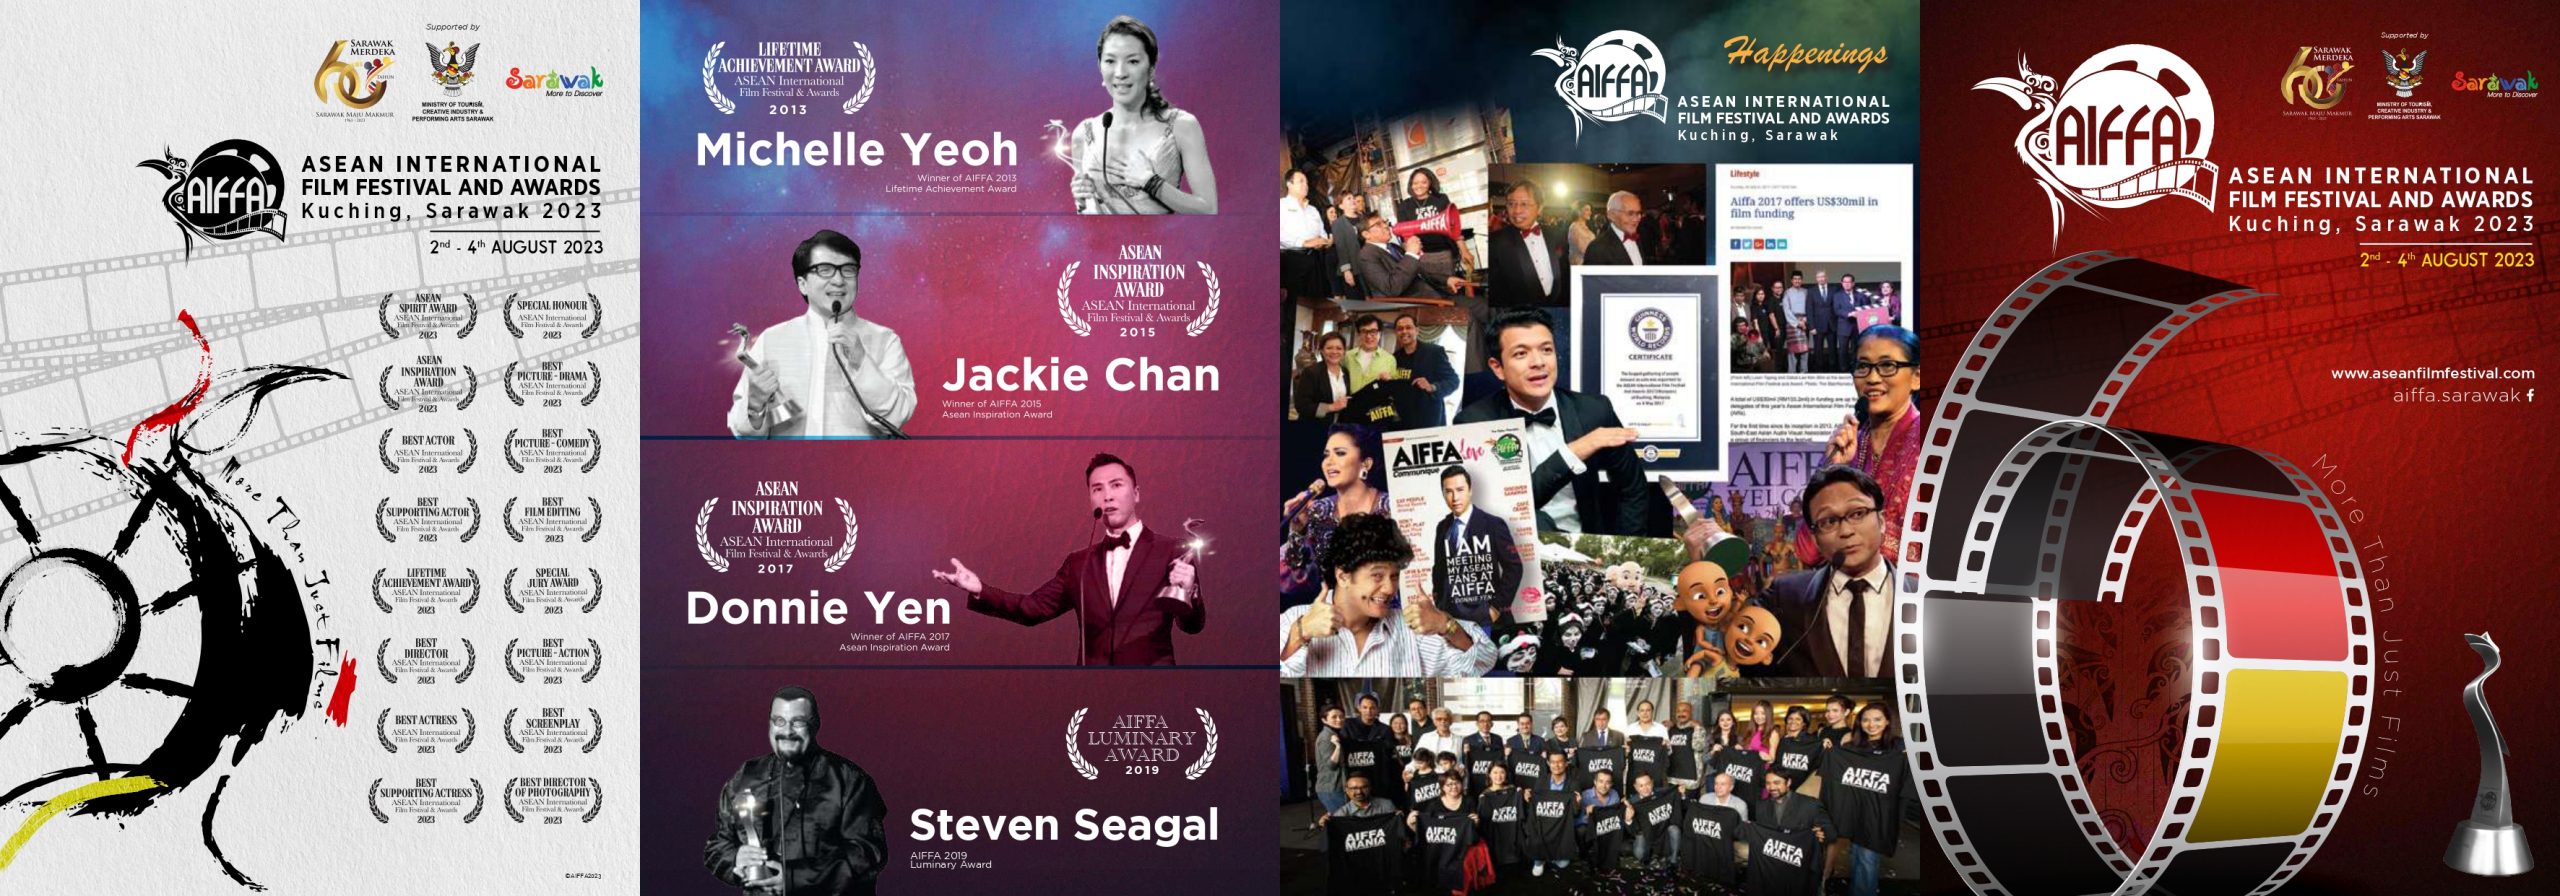 ASEAN INTERNATIONAL FILM FESTIVAL AND AWARDS